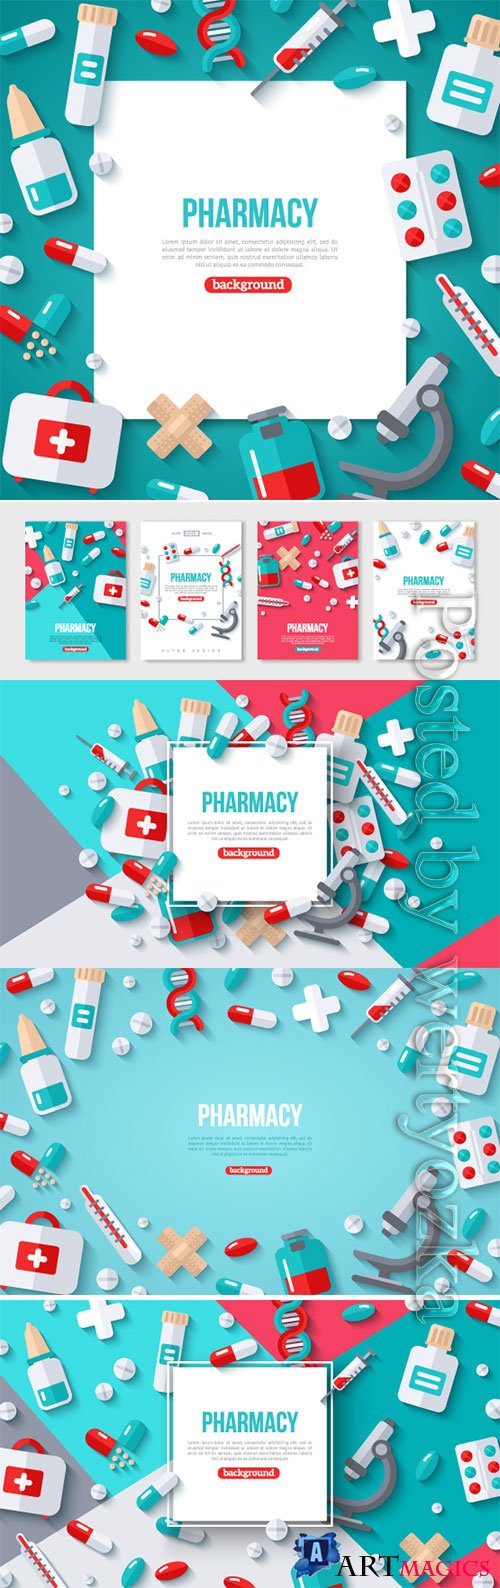 Pharmacy Banner Flat Icons